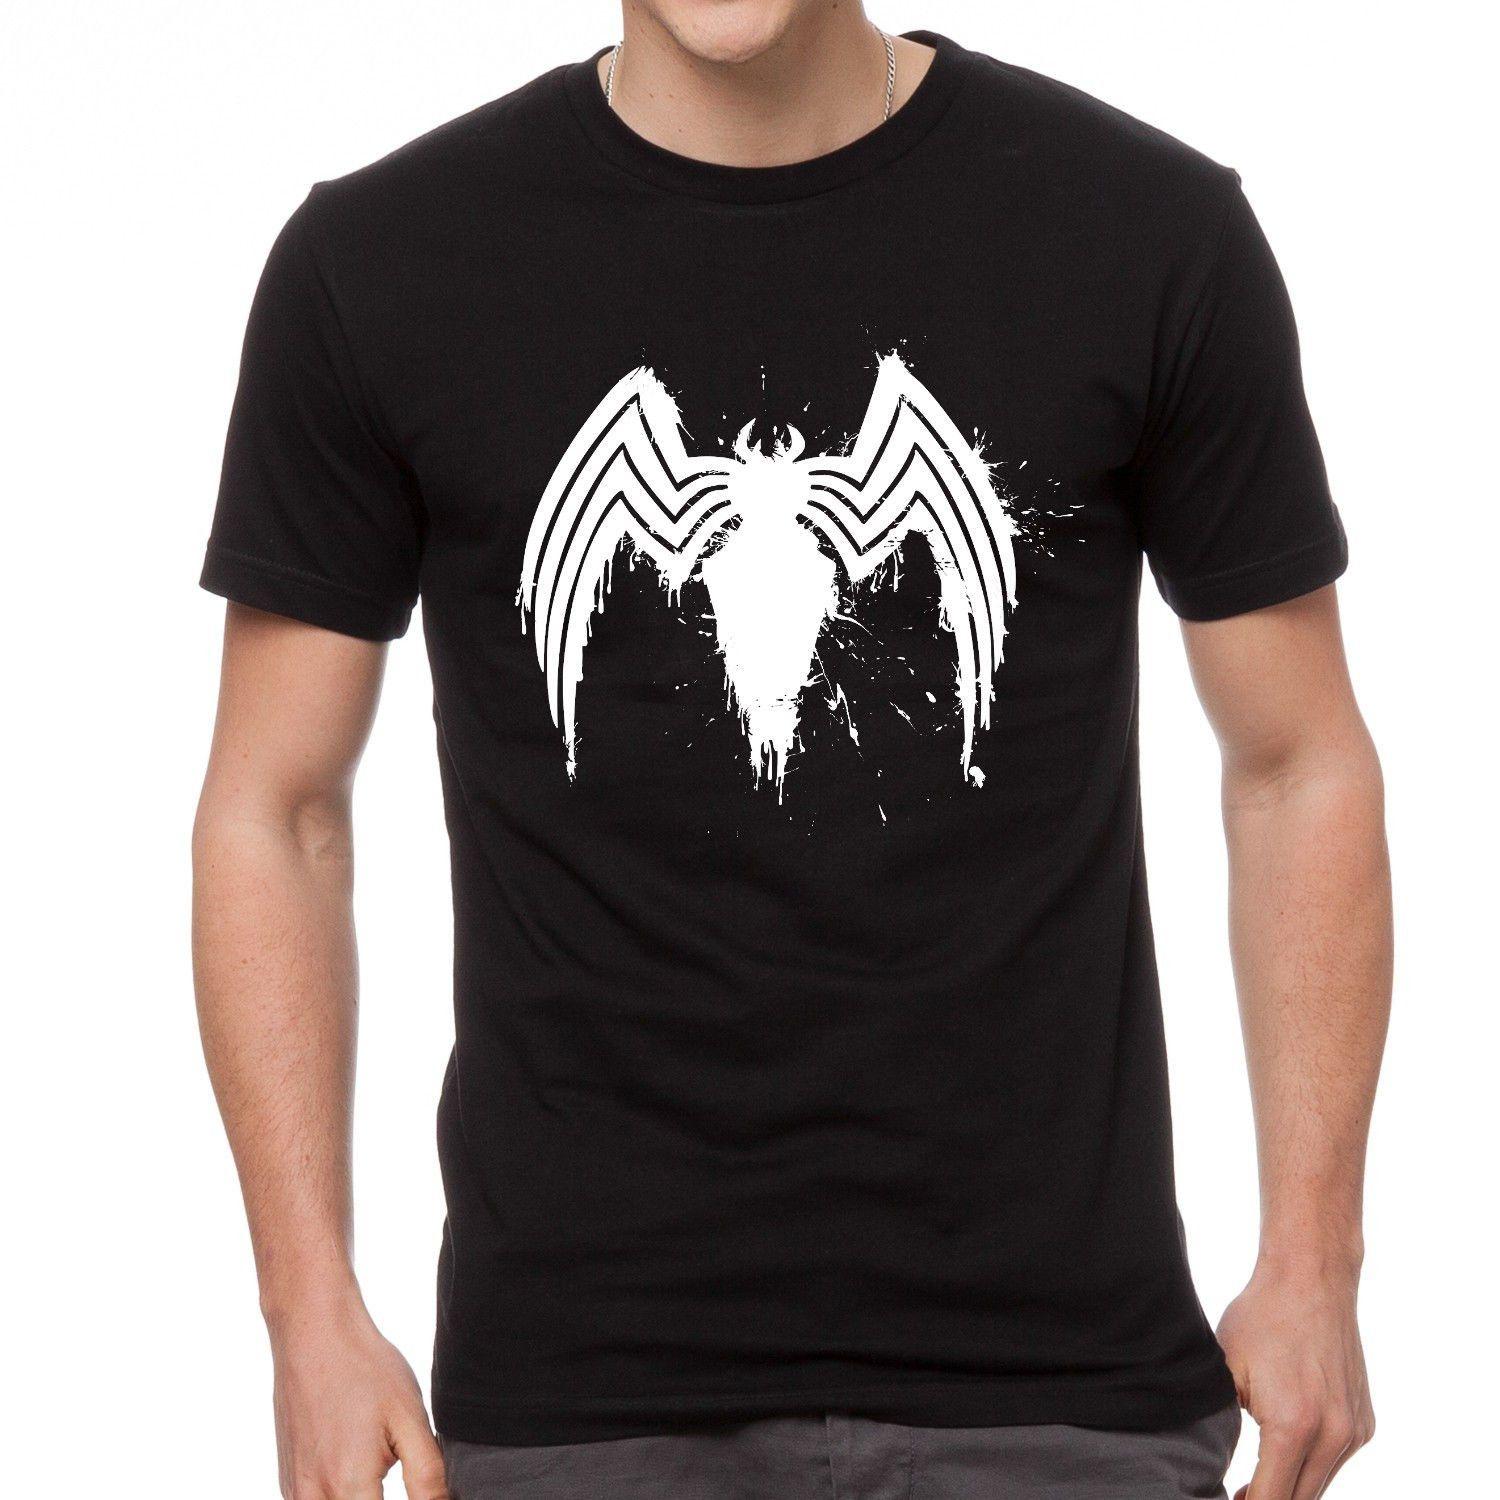 Symbiote Logo - US $10.18 48% OFF. VENOM Symbiote Logo 2018 Movie Film Spiderman T Shirt In T Shirts From Men's Clothing On Aliexpress.com